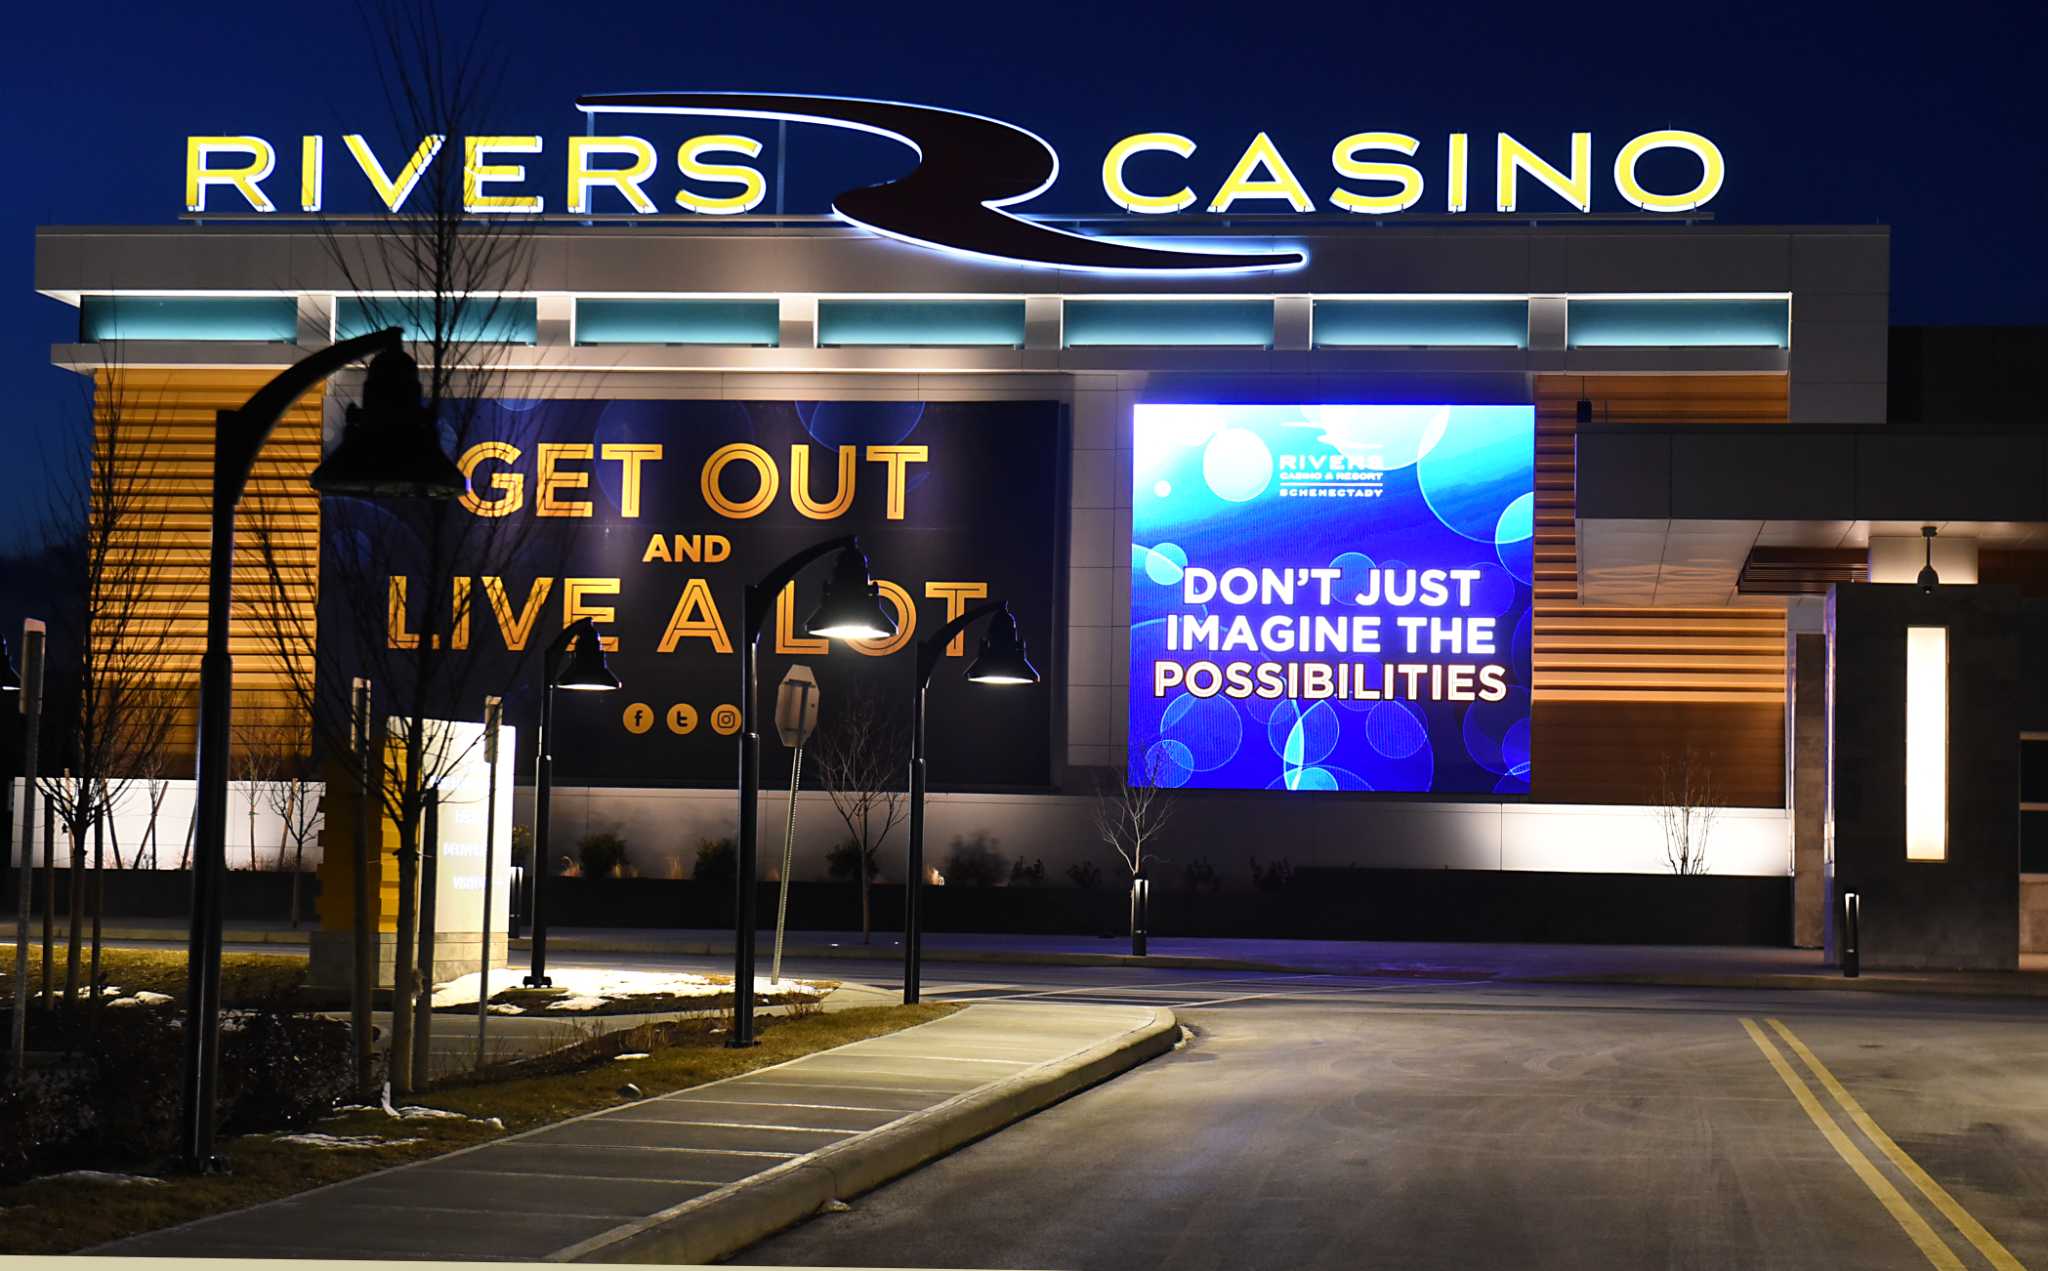 restaurants near rivers casino il